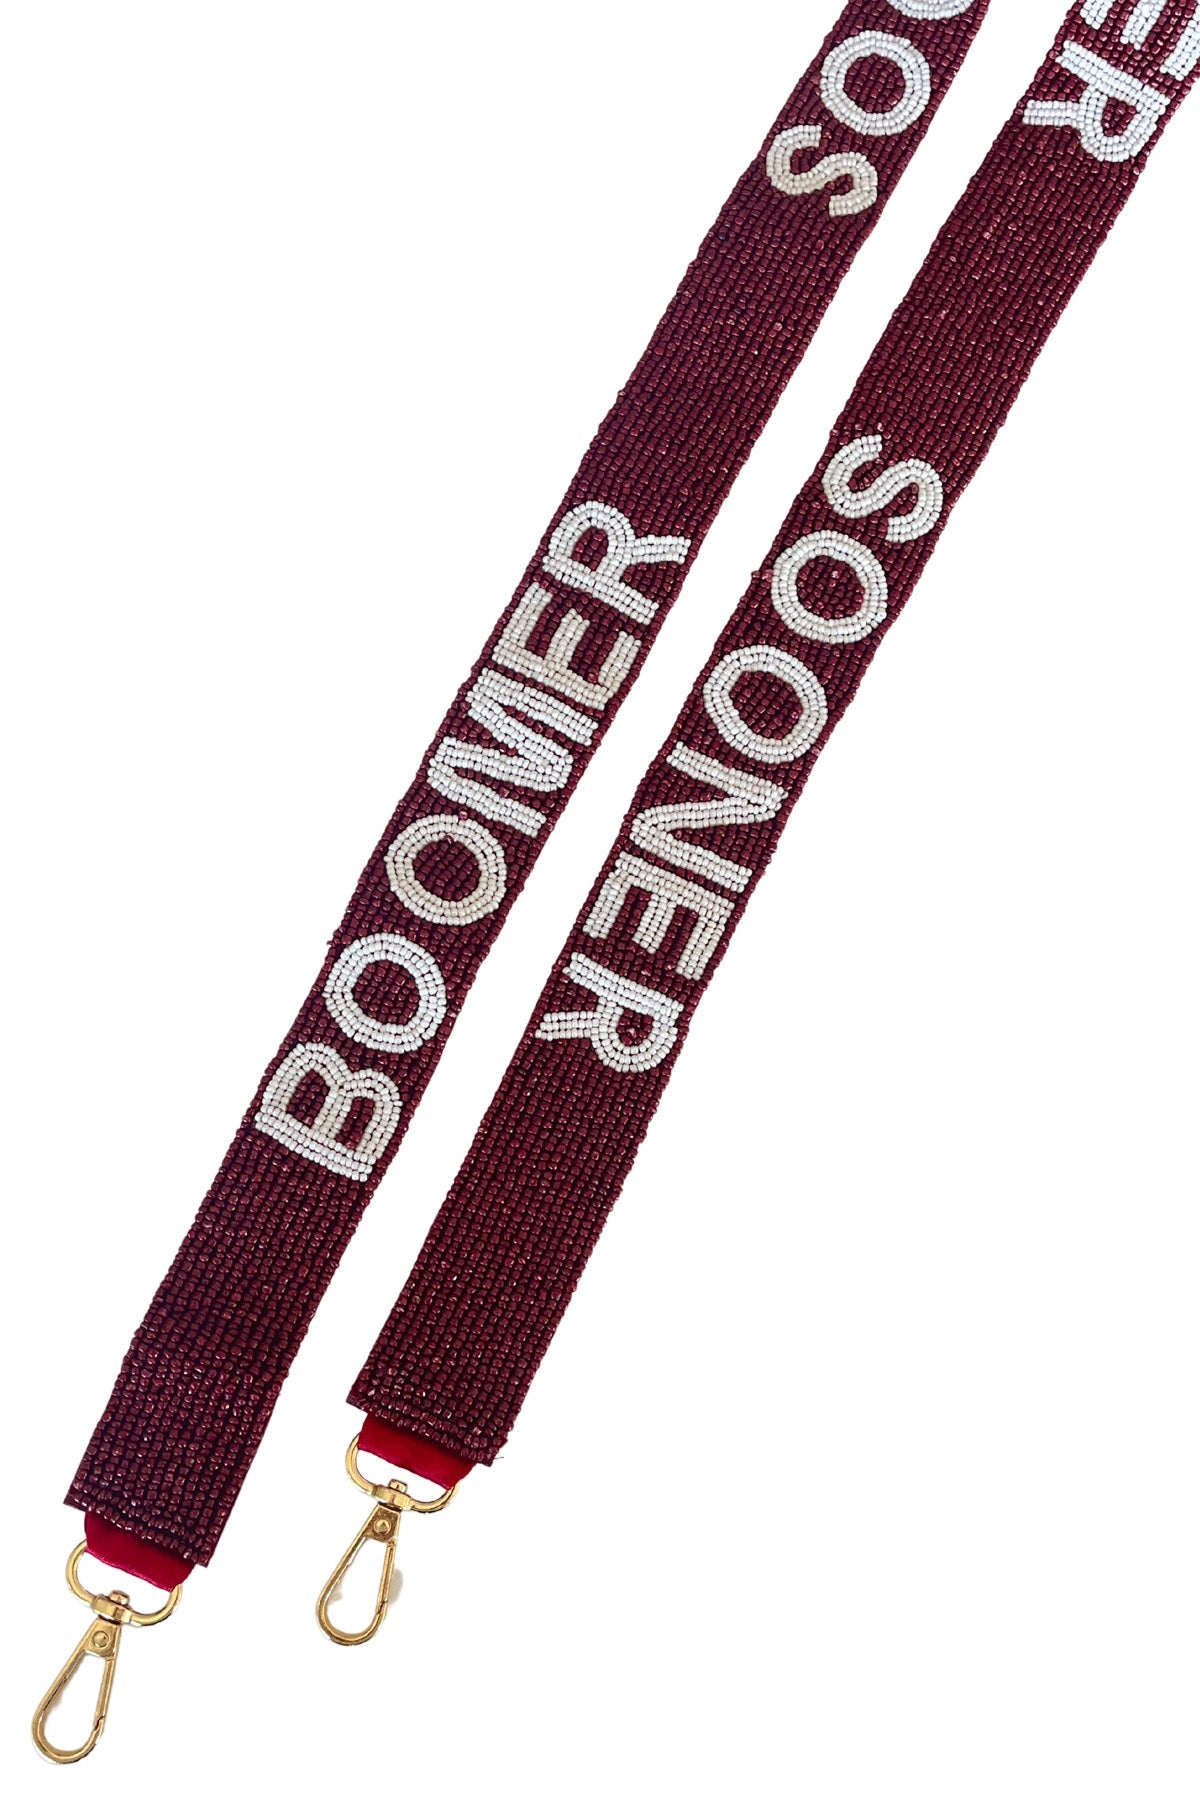 Boomer Sooner Red Beaded Crossbody Bag Strap - Bash - Color Game